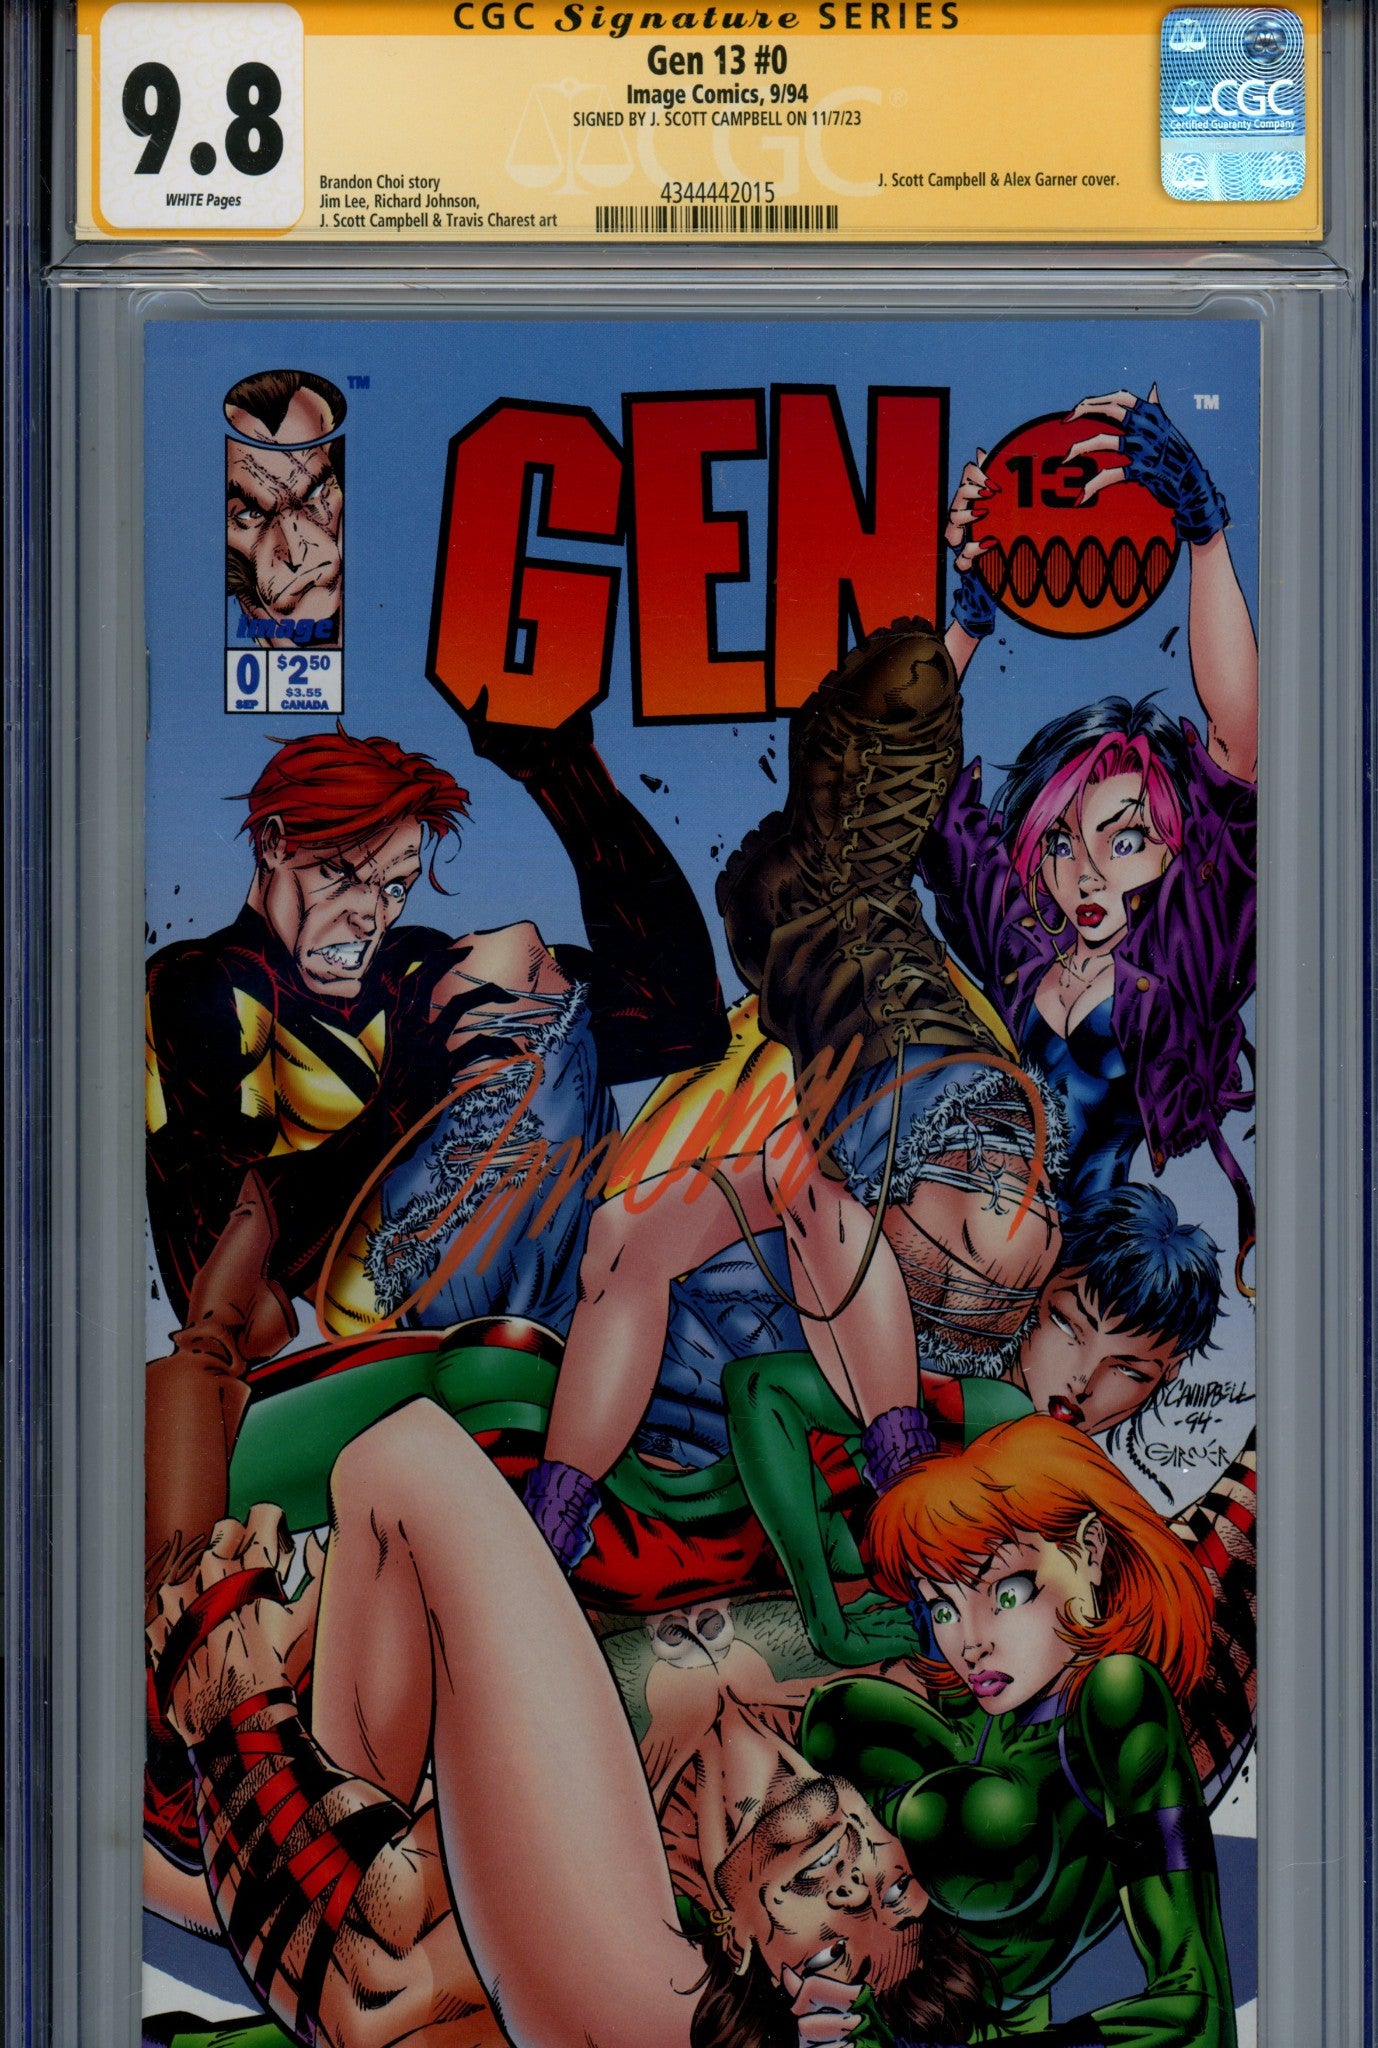 Gen 13 Vol 1 0 CGC 9.8 (NM/M) (1994) Signed x1 Cover J. Scott Campbell 